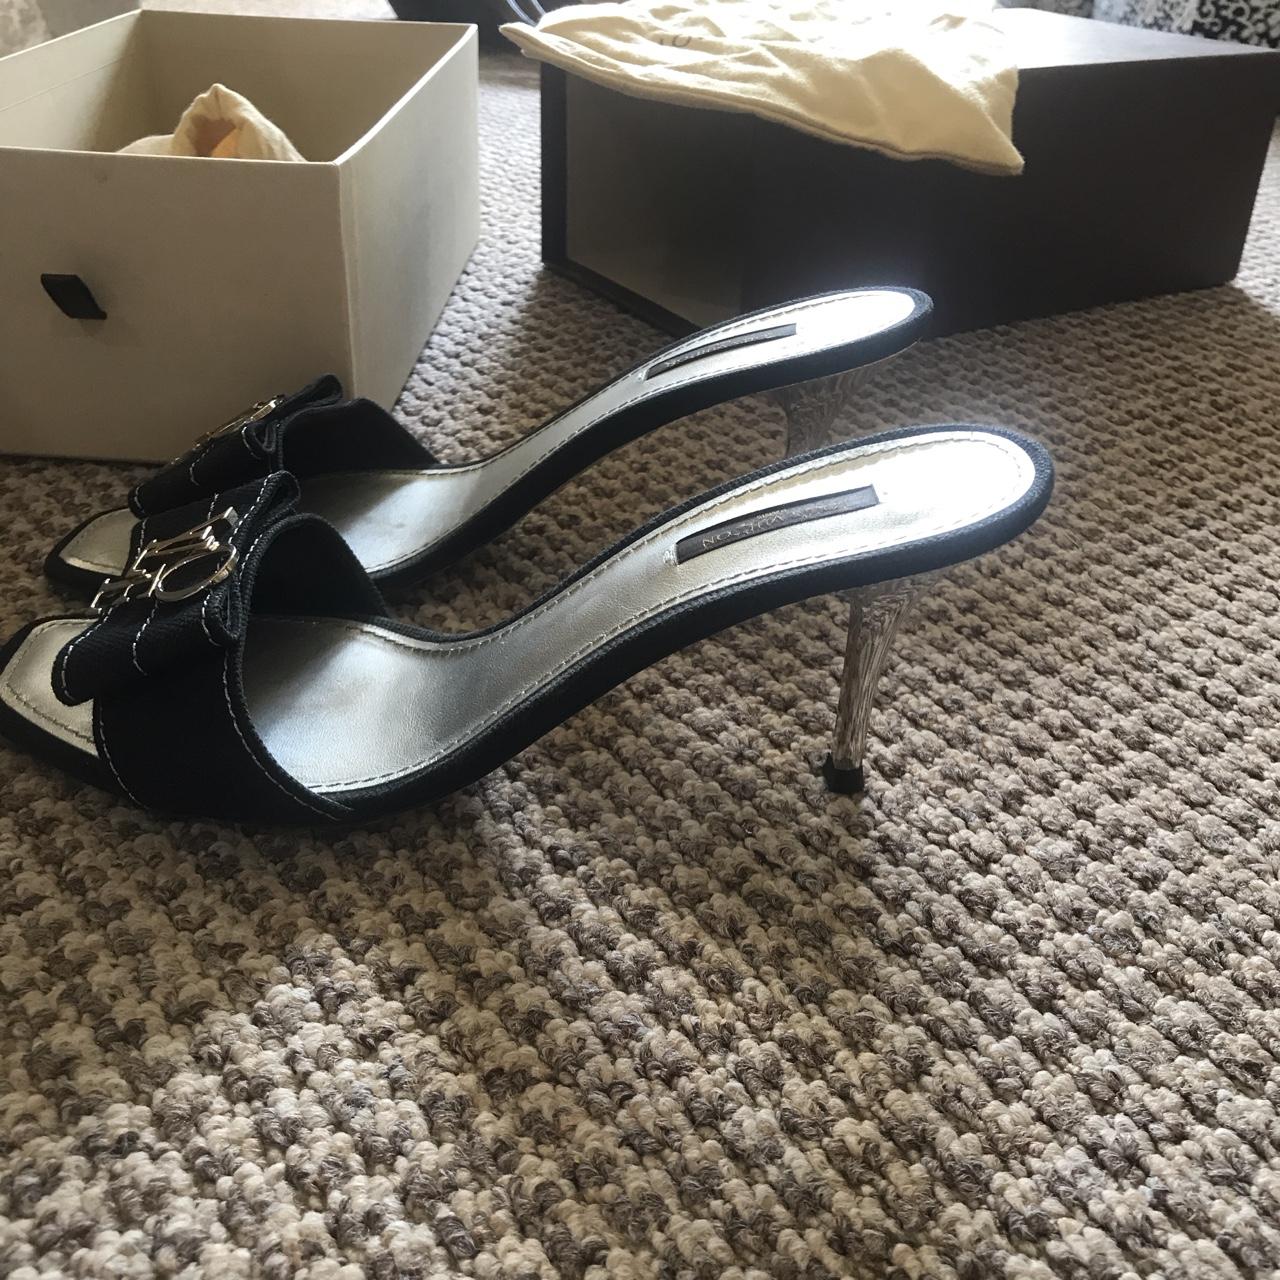 Louis vuitton pearl white heels size UK 5 worn once - Depop